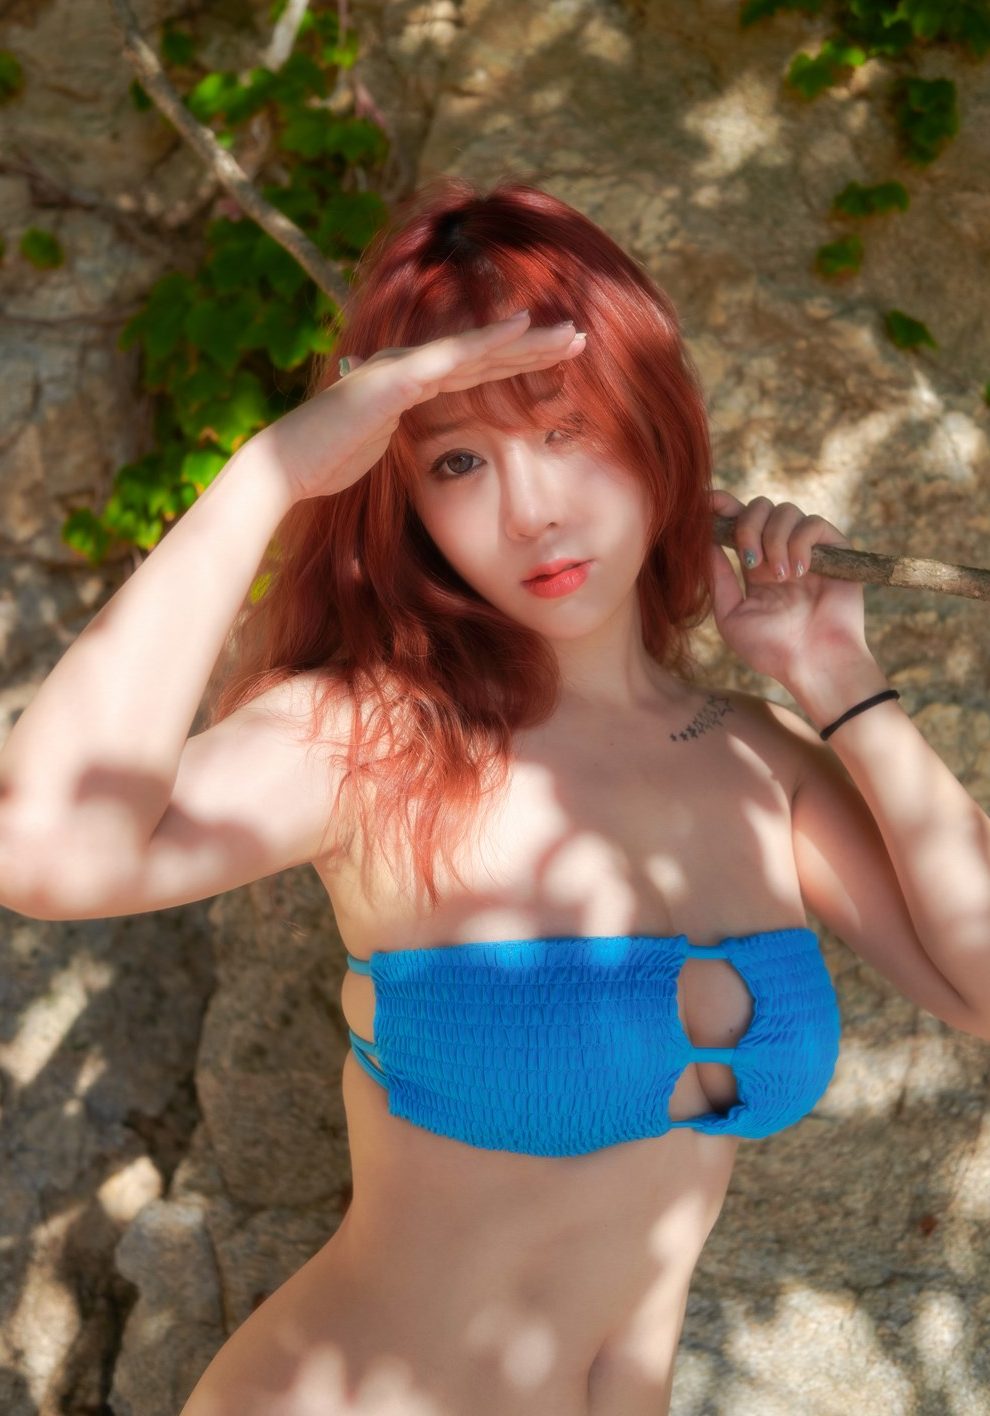 wang yu chun gets naked at the beach, shows her big tits 